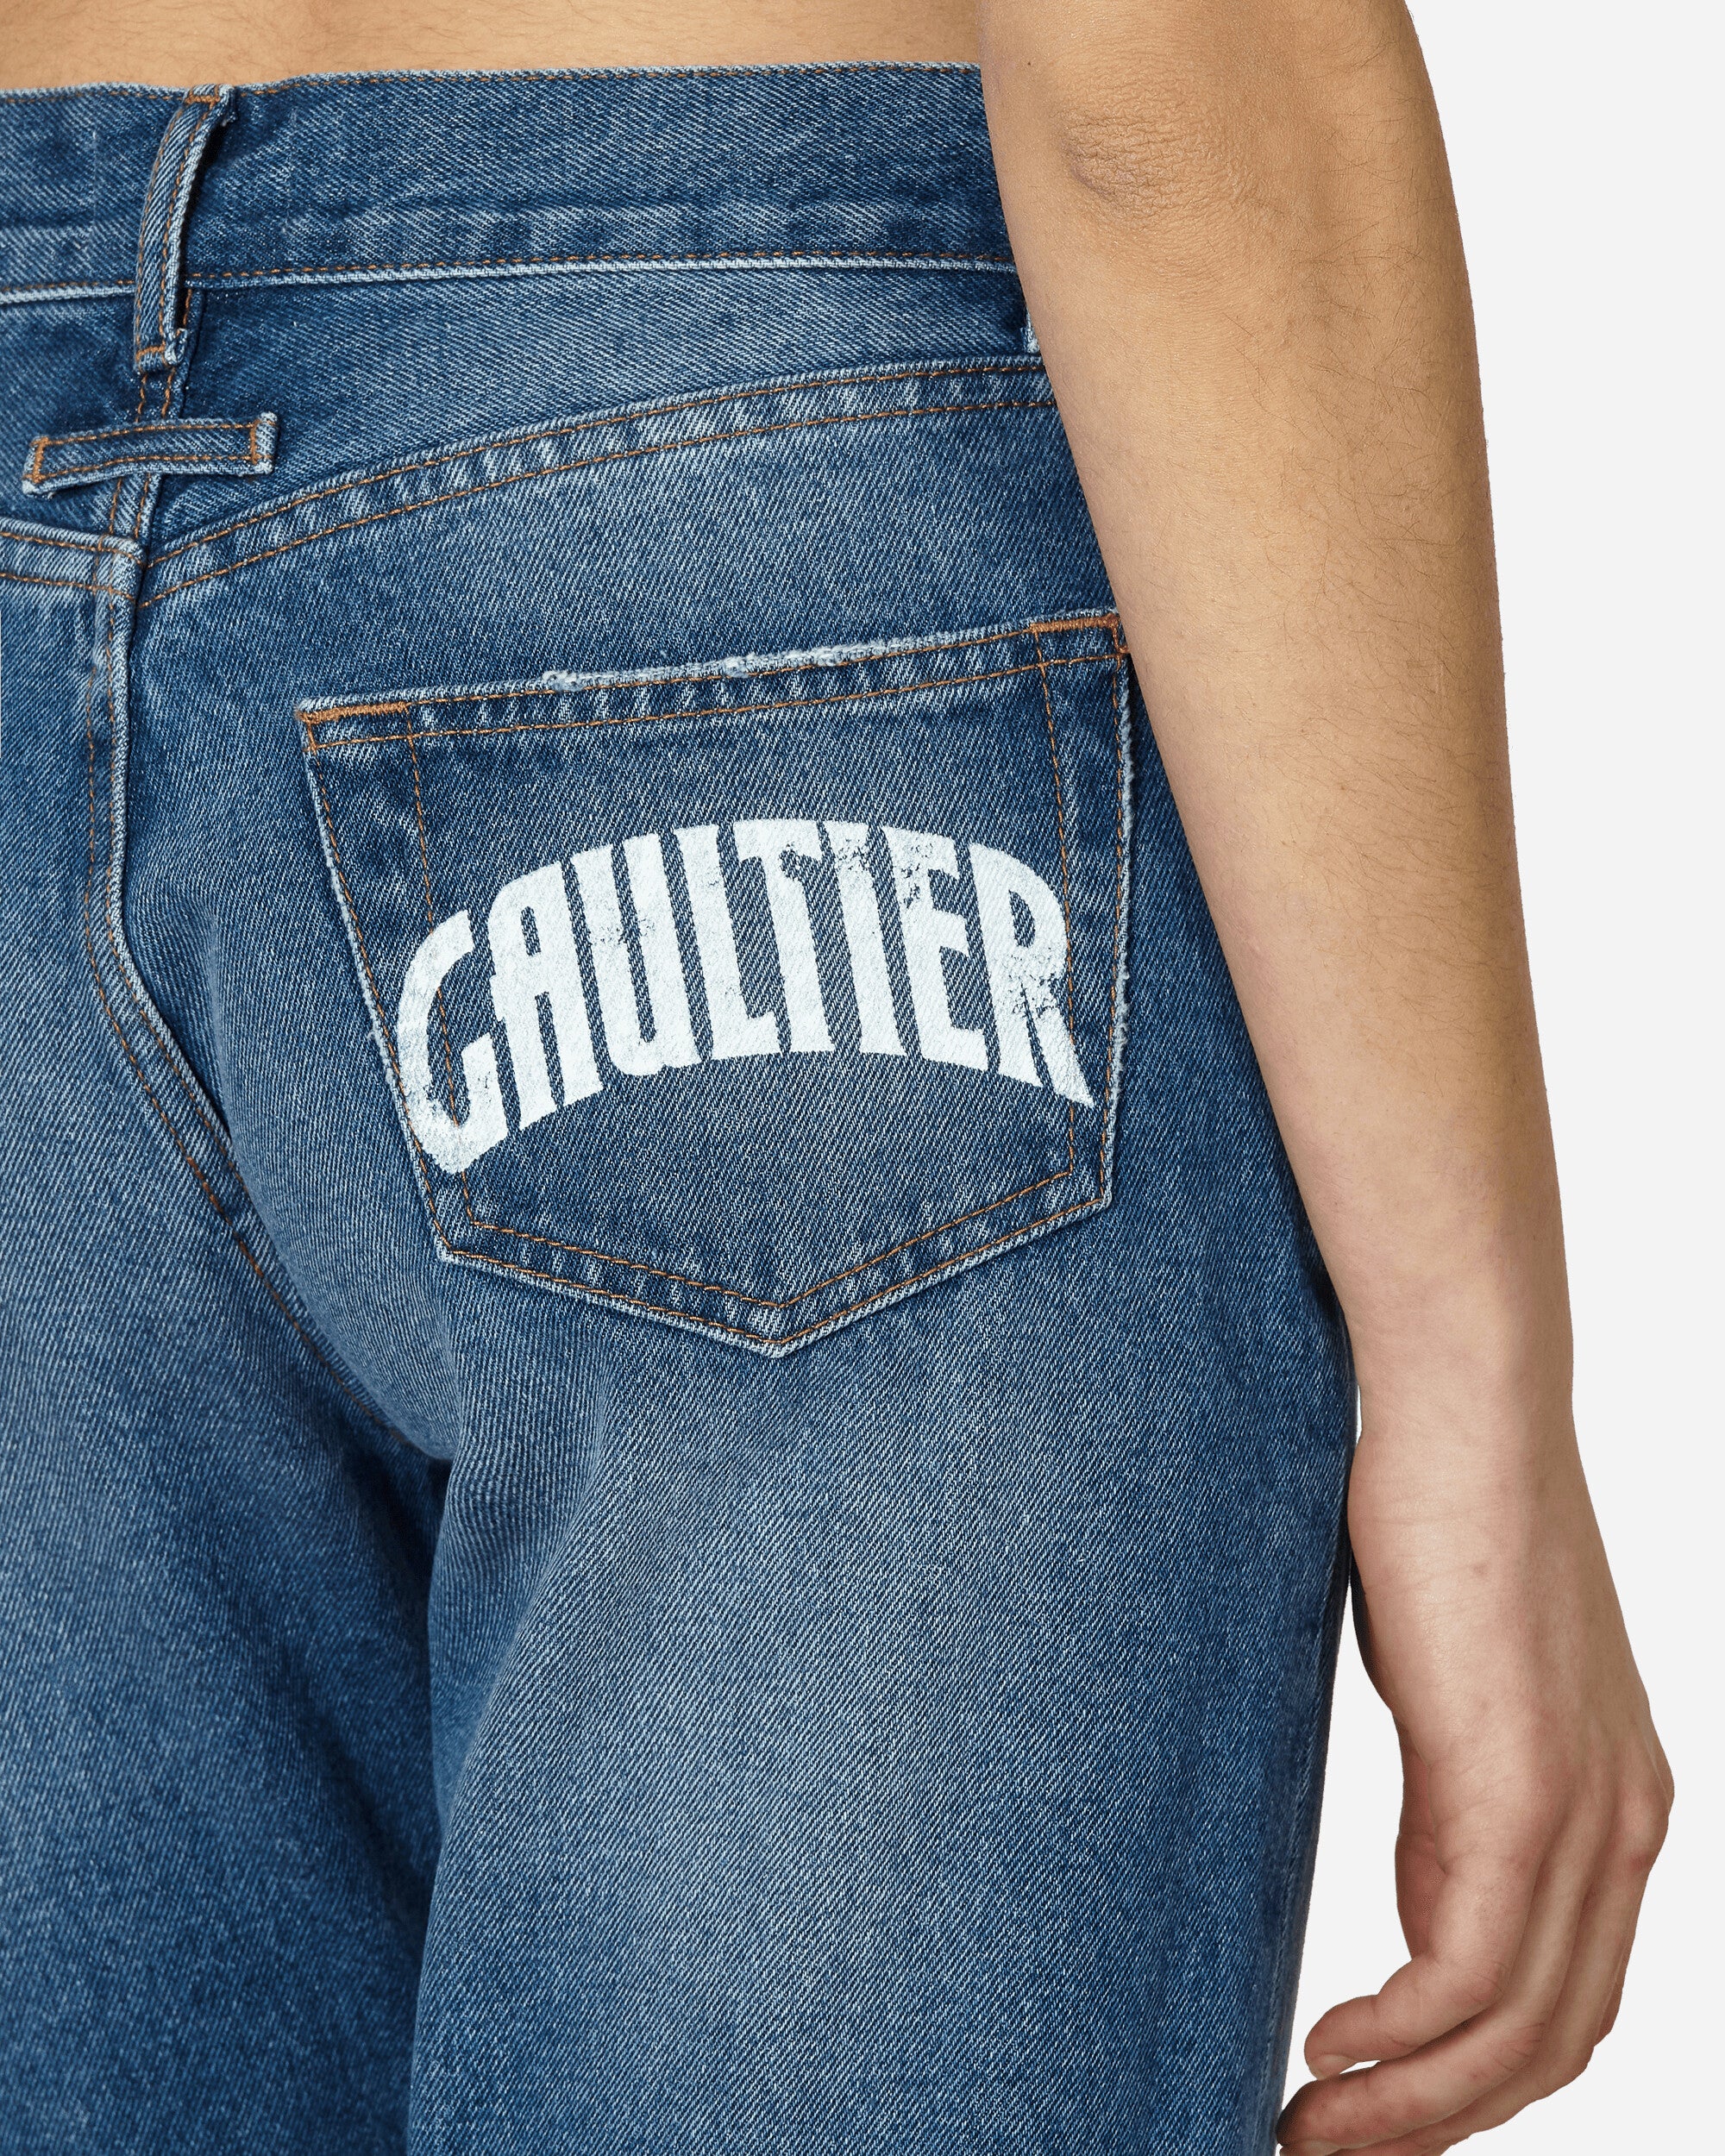 Jean Paul Gaultier Wmns Denim Pant With Screen Printed Logo Vintageblue/White Pants Denim F-JE126I-D013 5701